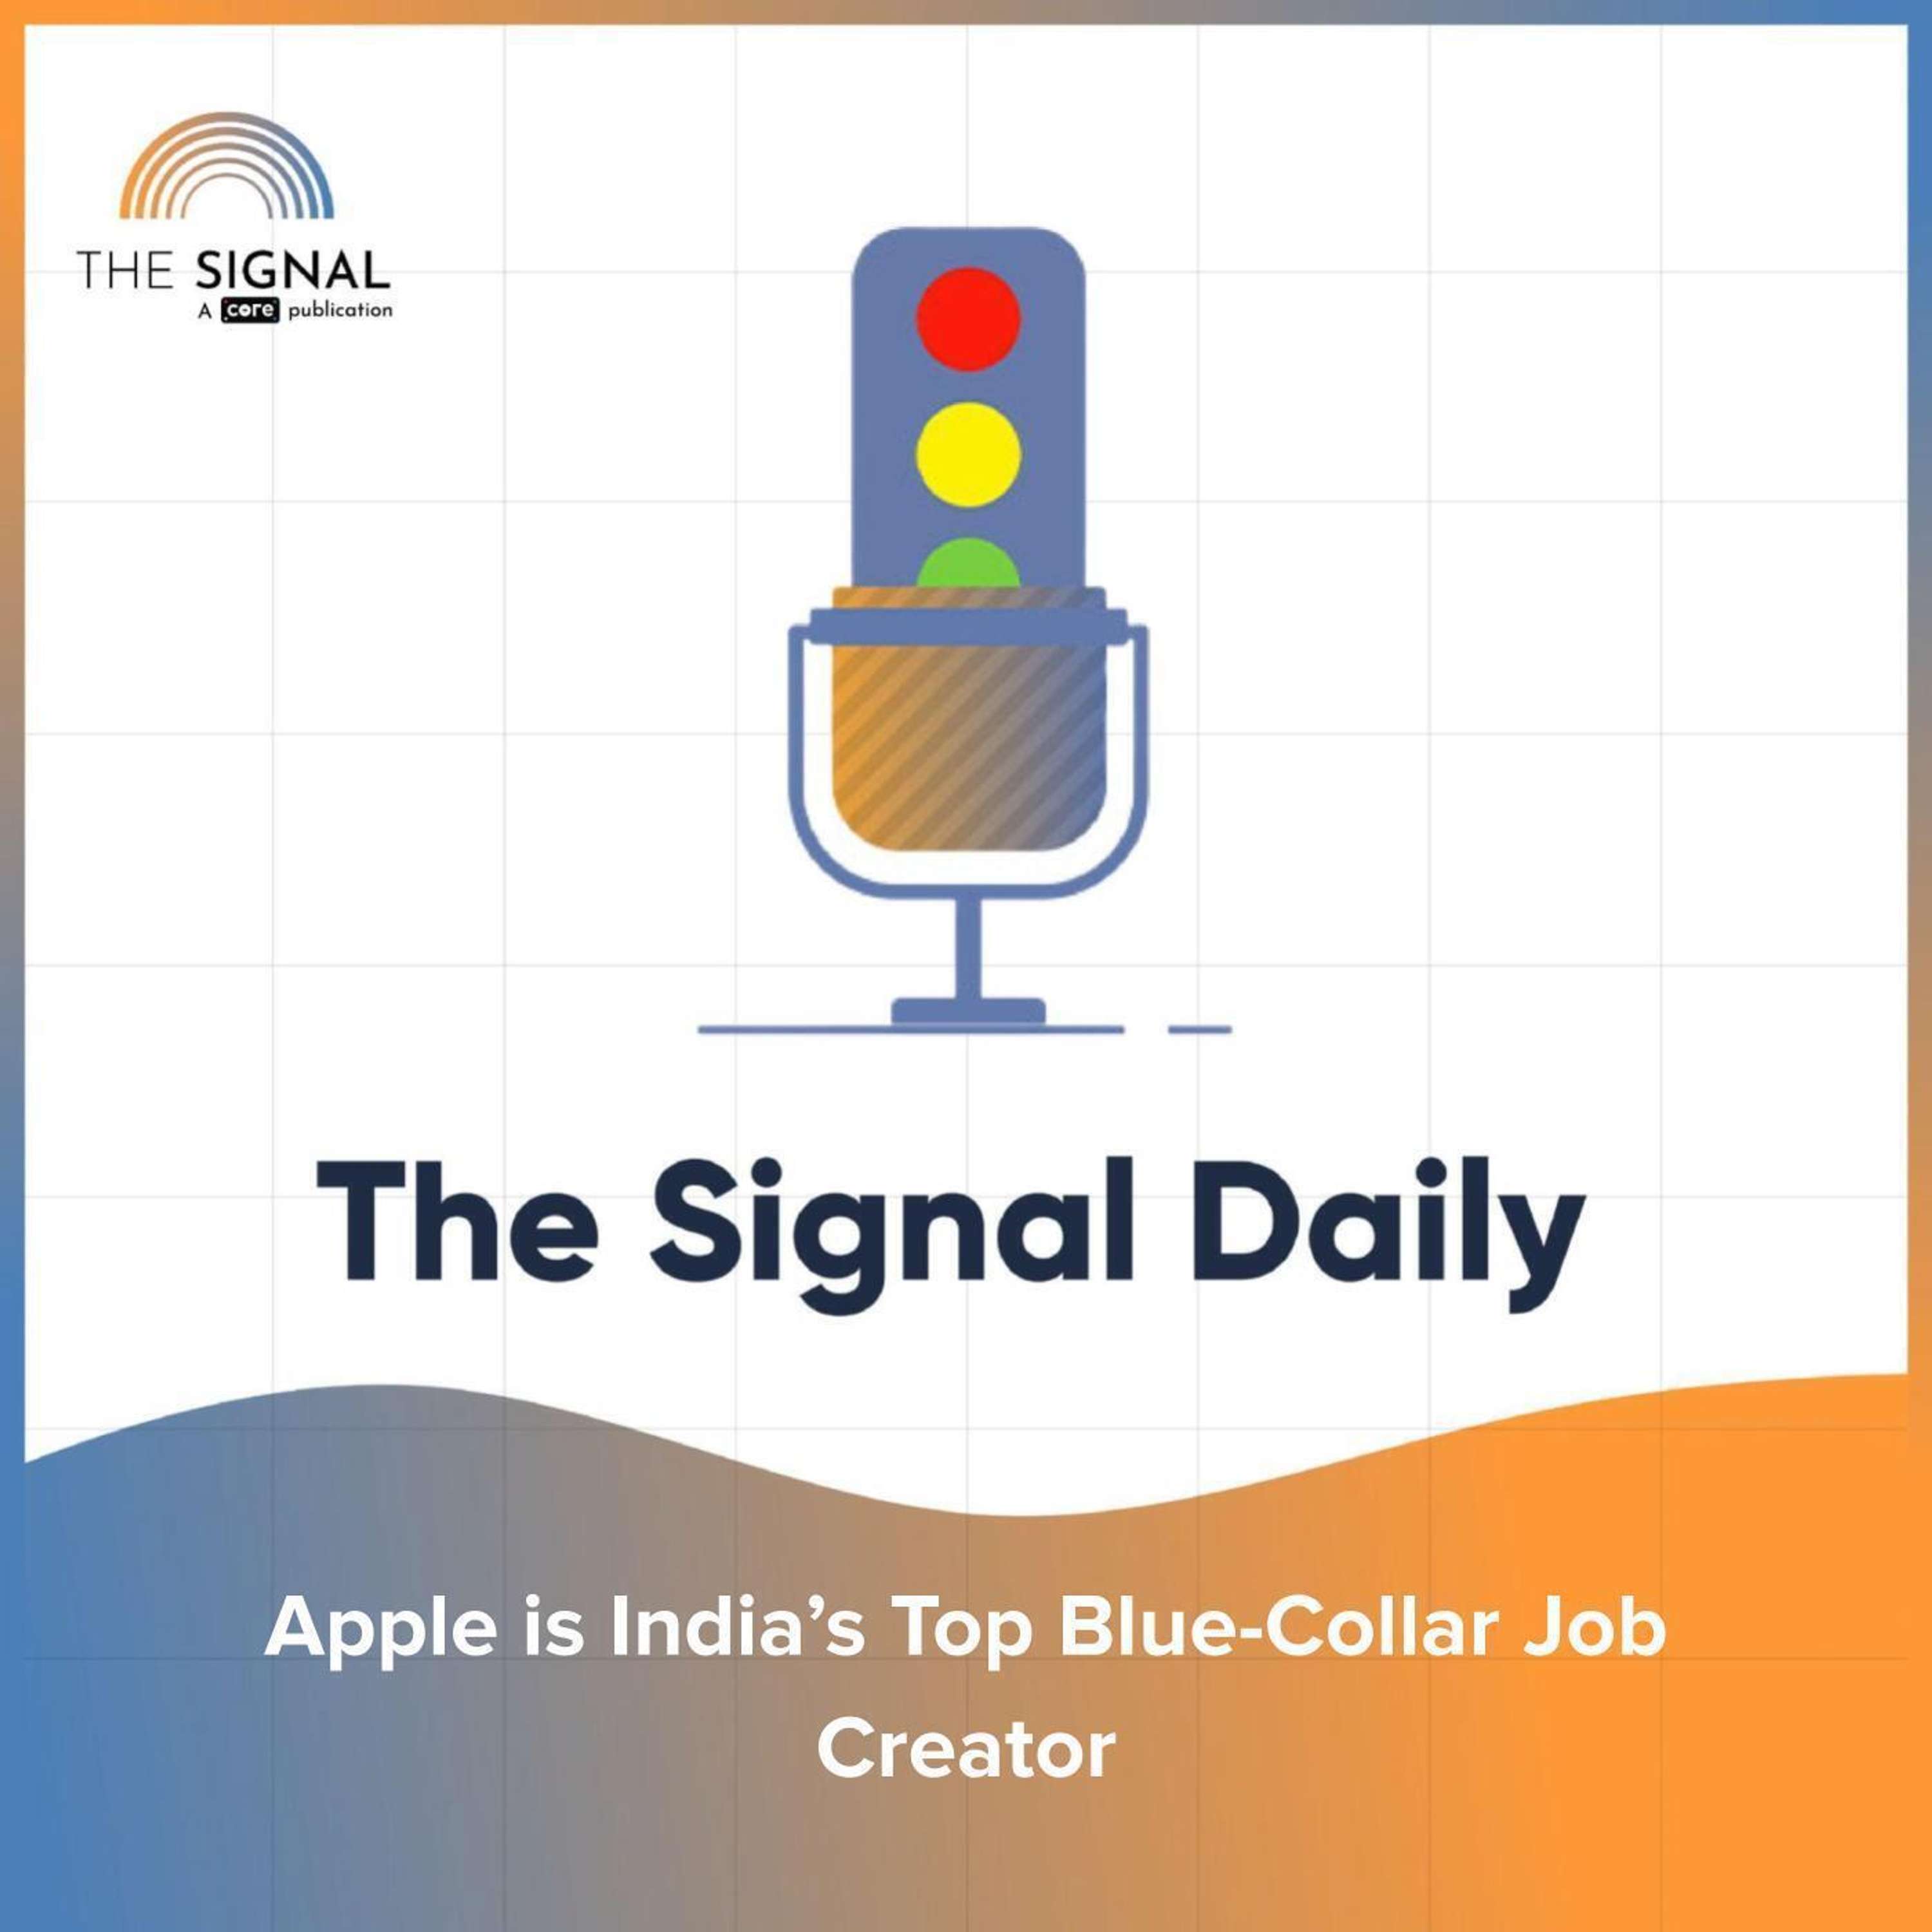 Apple is India’s Top Blue-Collar Job Creator